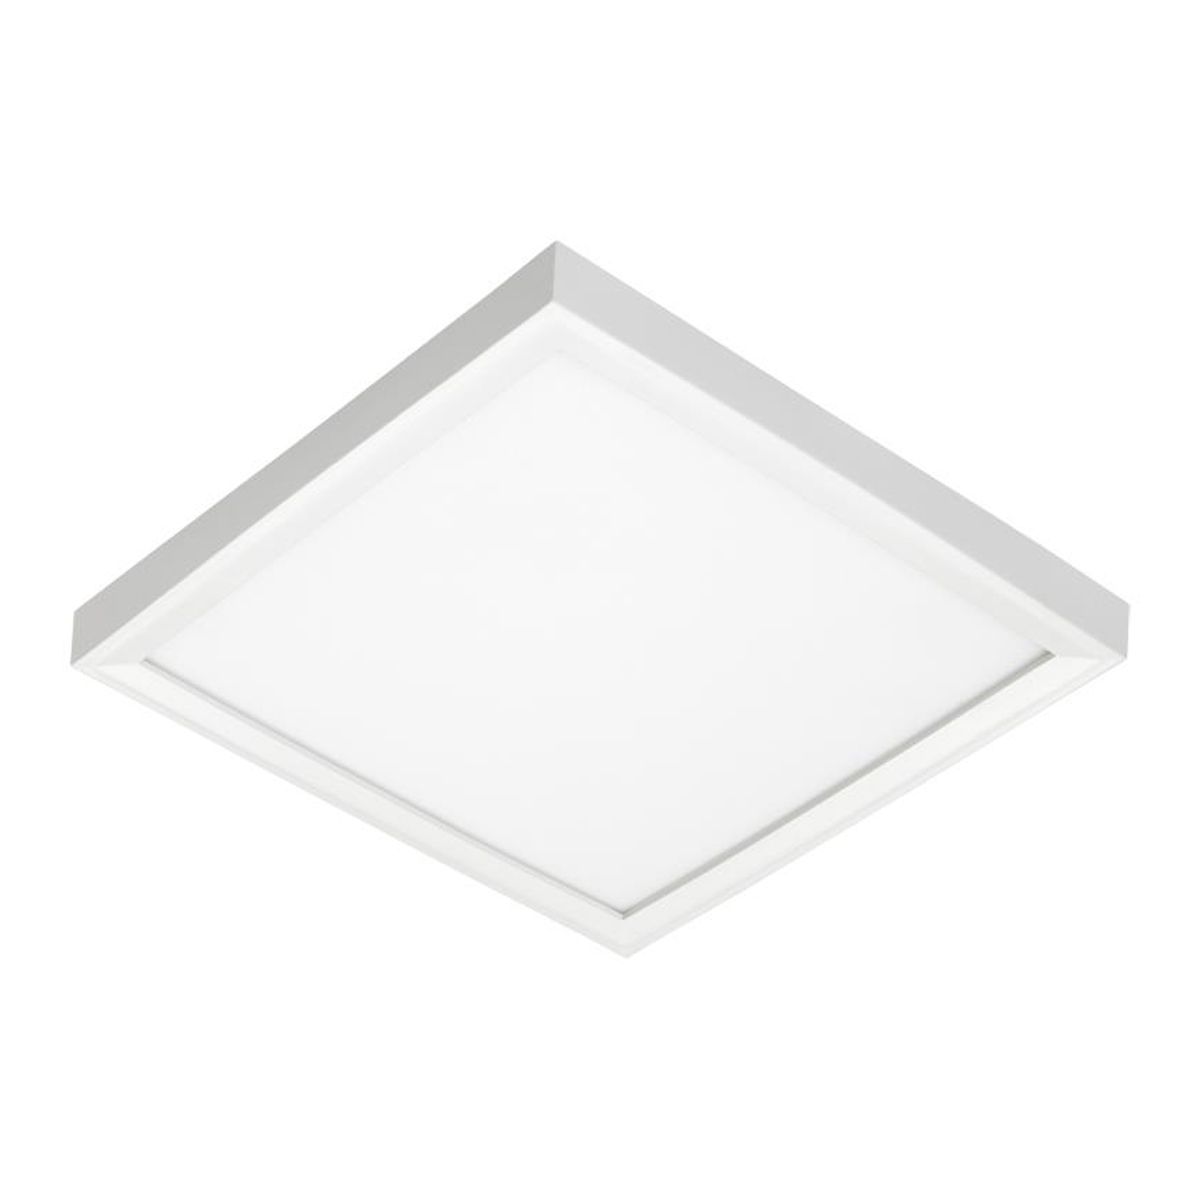 JSFSQ LED Square Disk Light 1300 Lumens 3000K 120-277V White finish